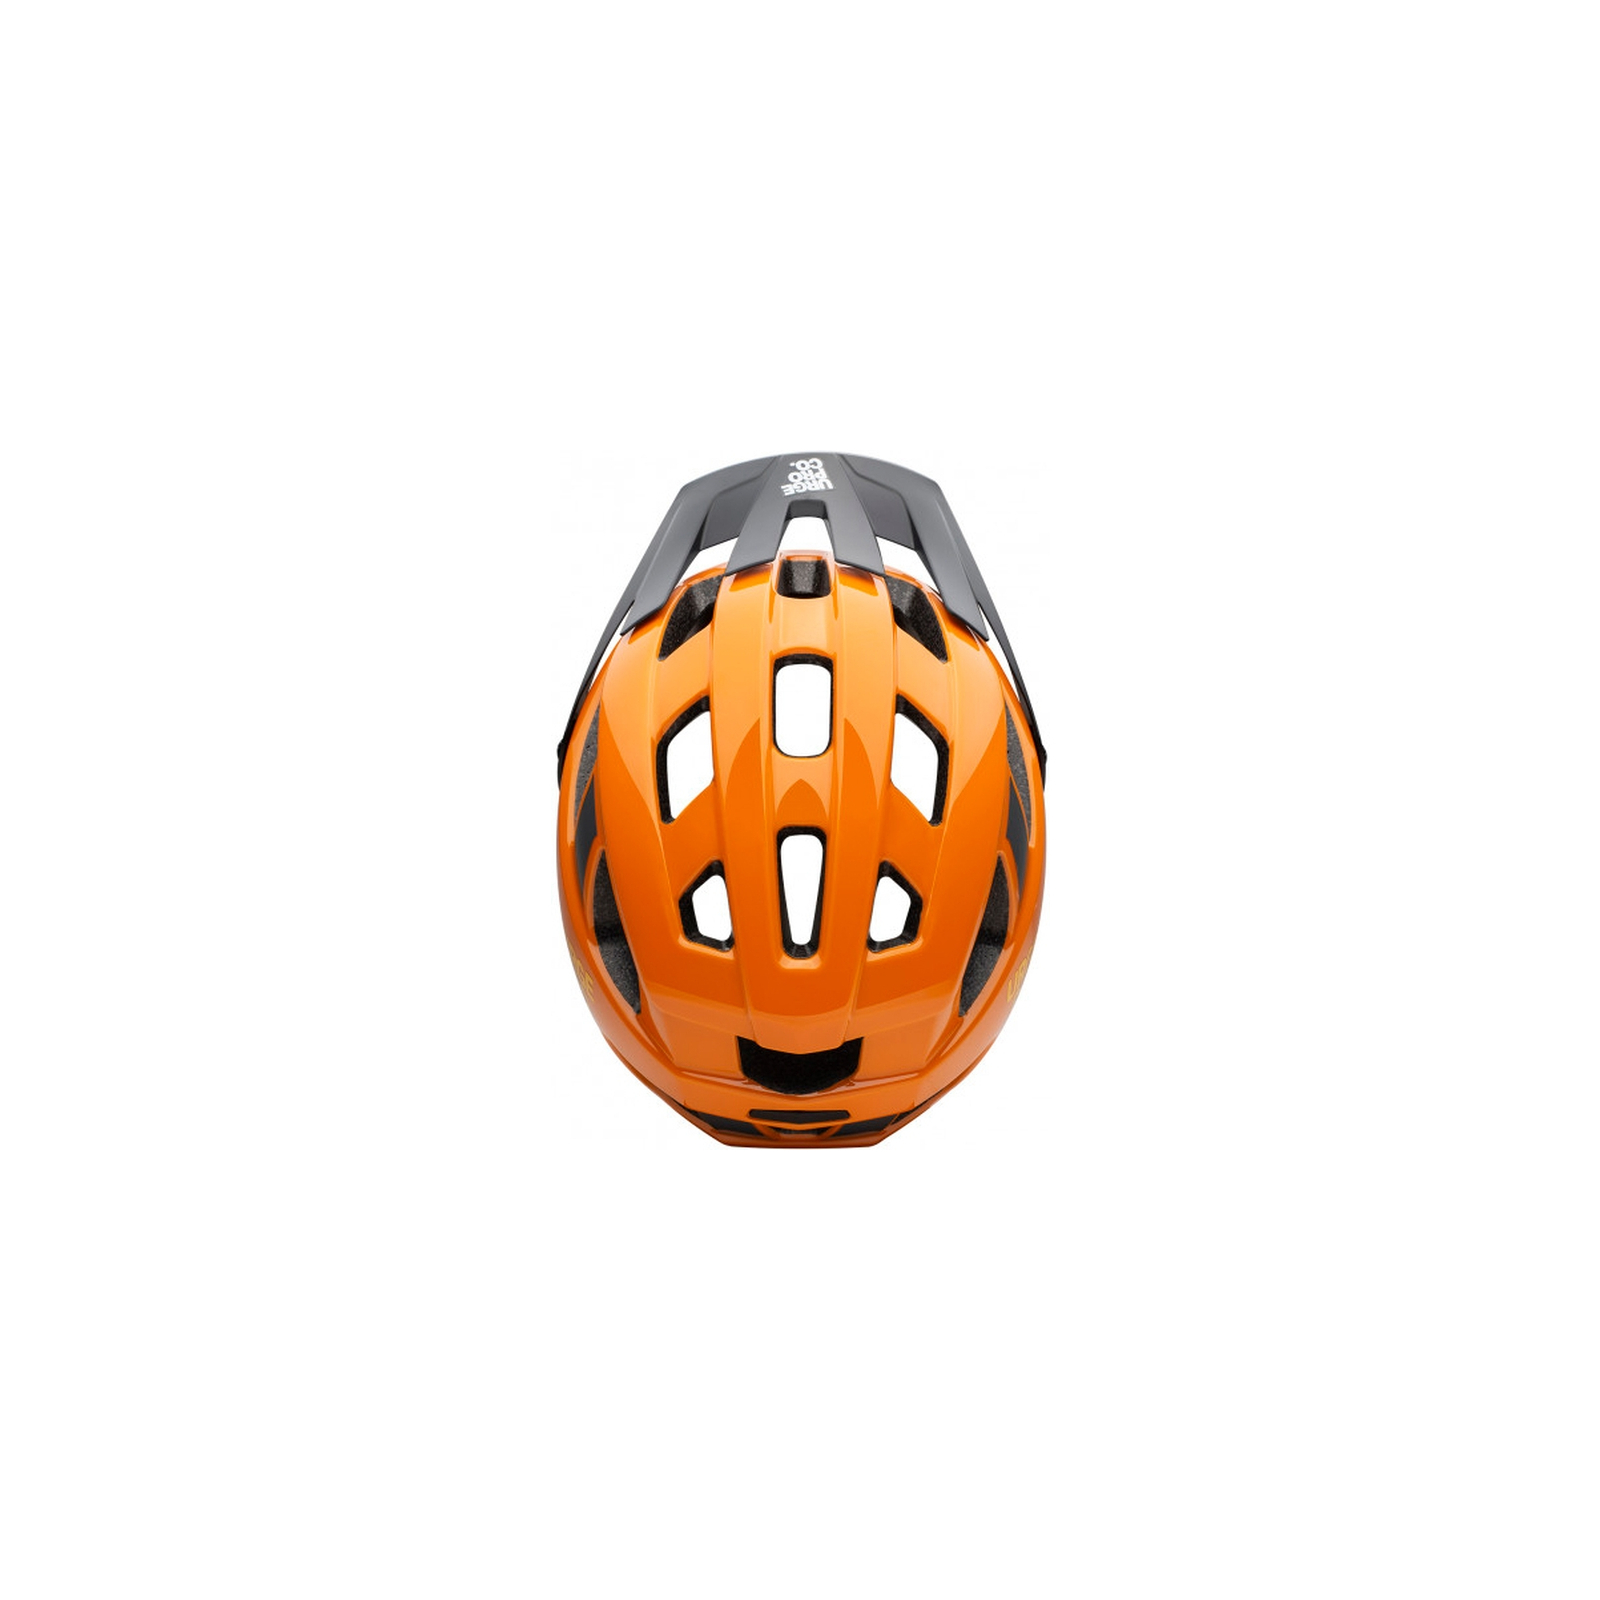 Шлем Urge AllTrail Помаранчевий S/M 55-59 см (UBP22660M) изображение 5